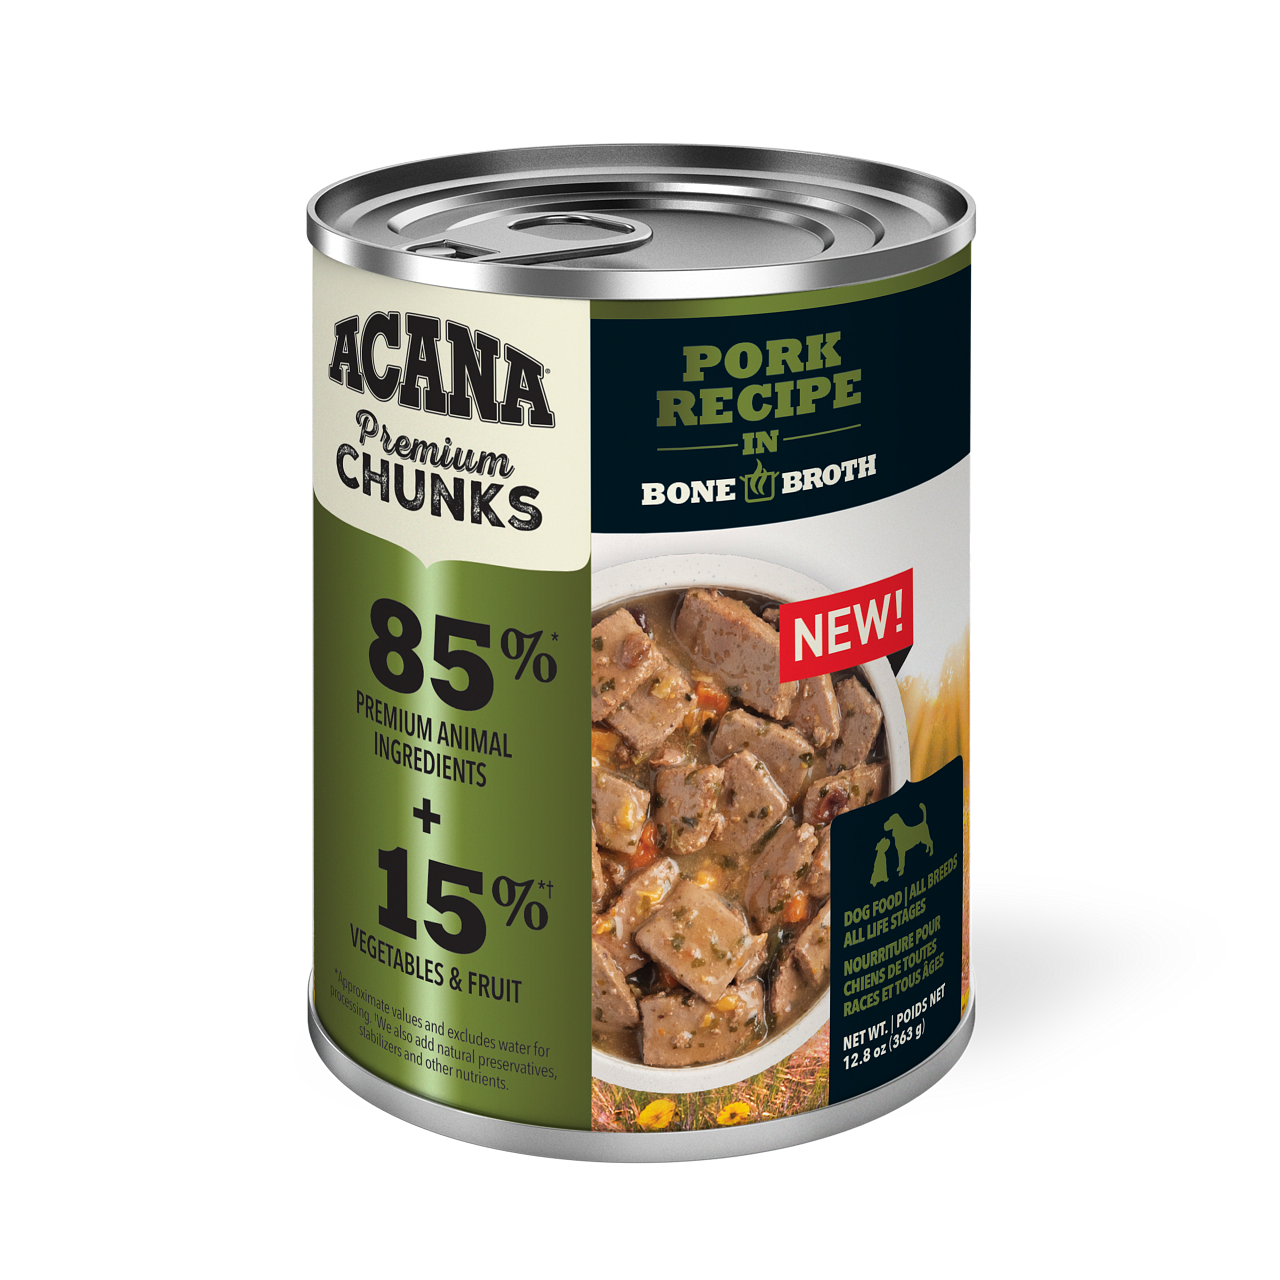 Acana Premium Chunks, Pork Recipe in Bone Broth Wet Dog Food, 12.8-oz, Case of 12